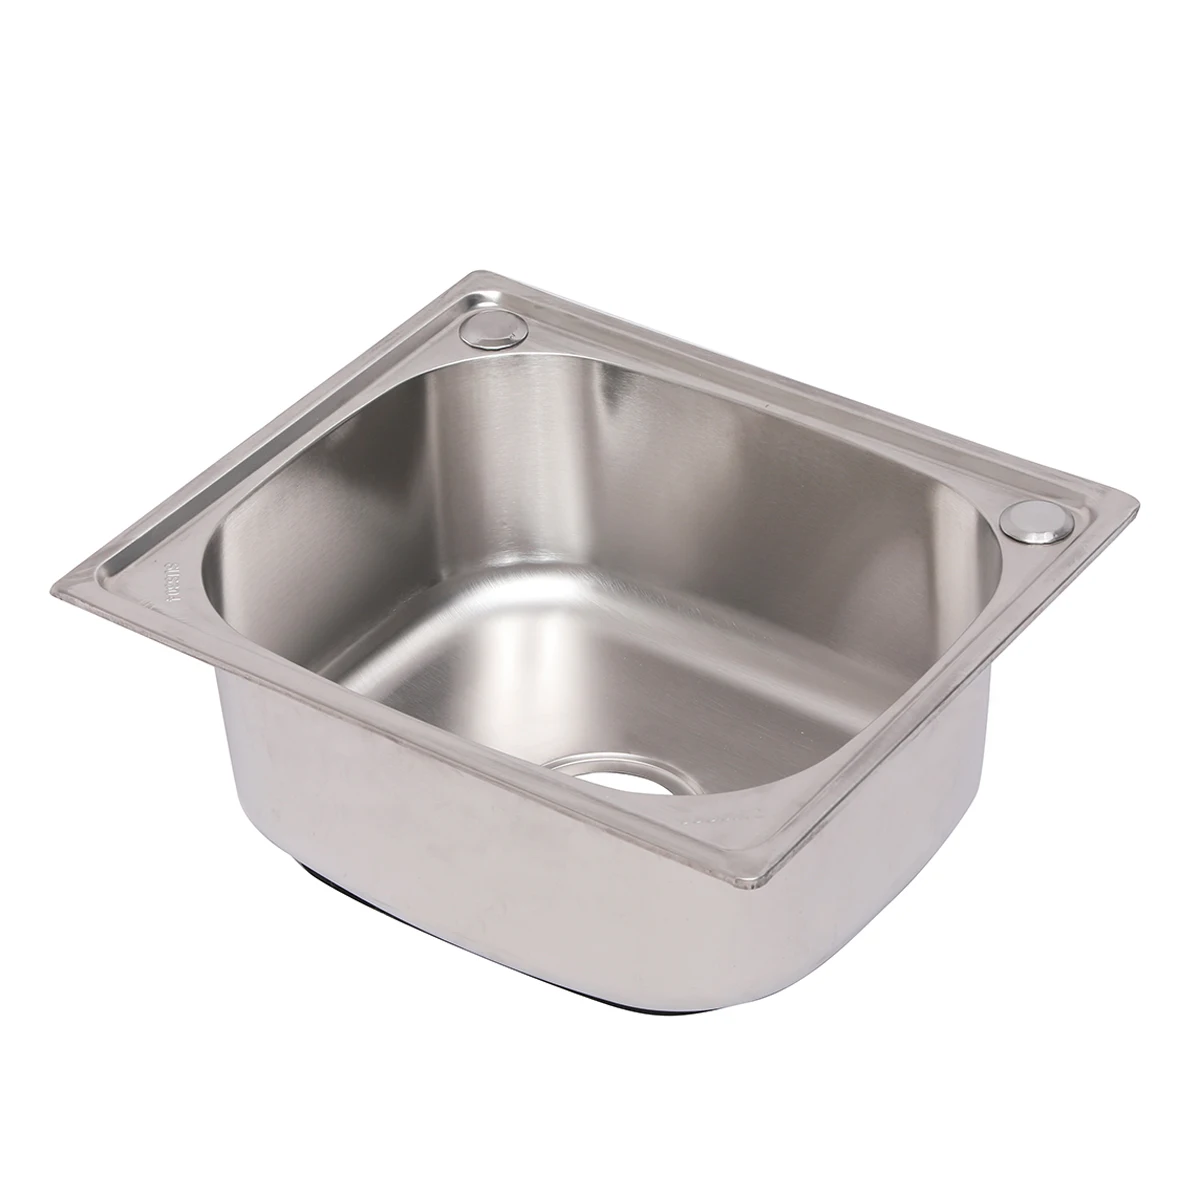 Cheap Deep Press single Bowl 304 Stainless Steel Kitchen Sink